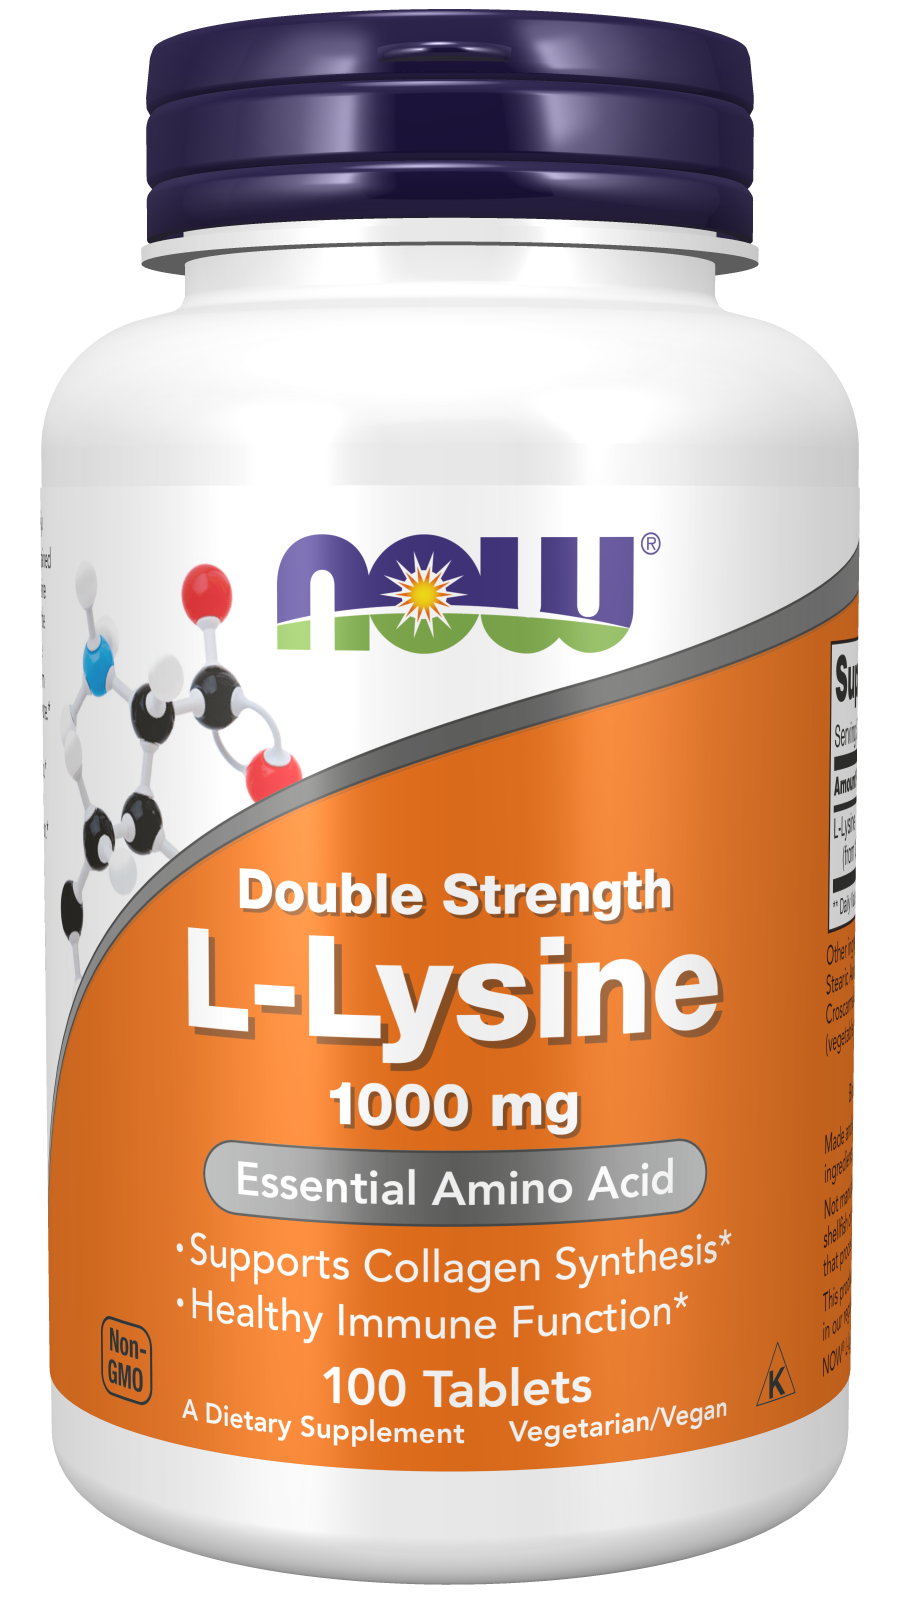 L-Lysine, Double Strength 1000 mg - 100 Tablets Bottle Front